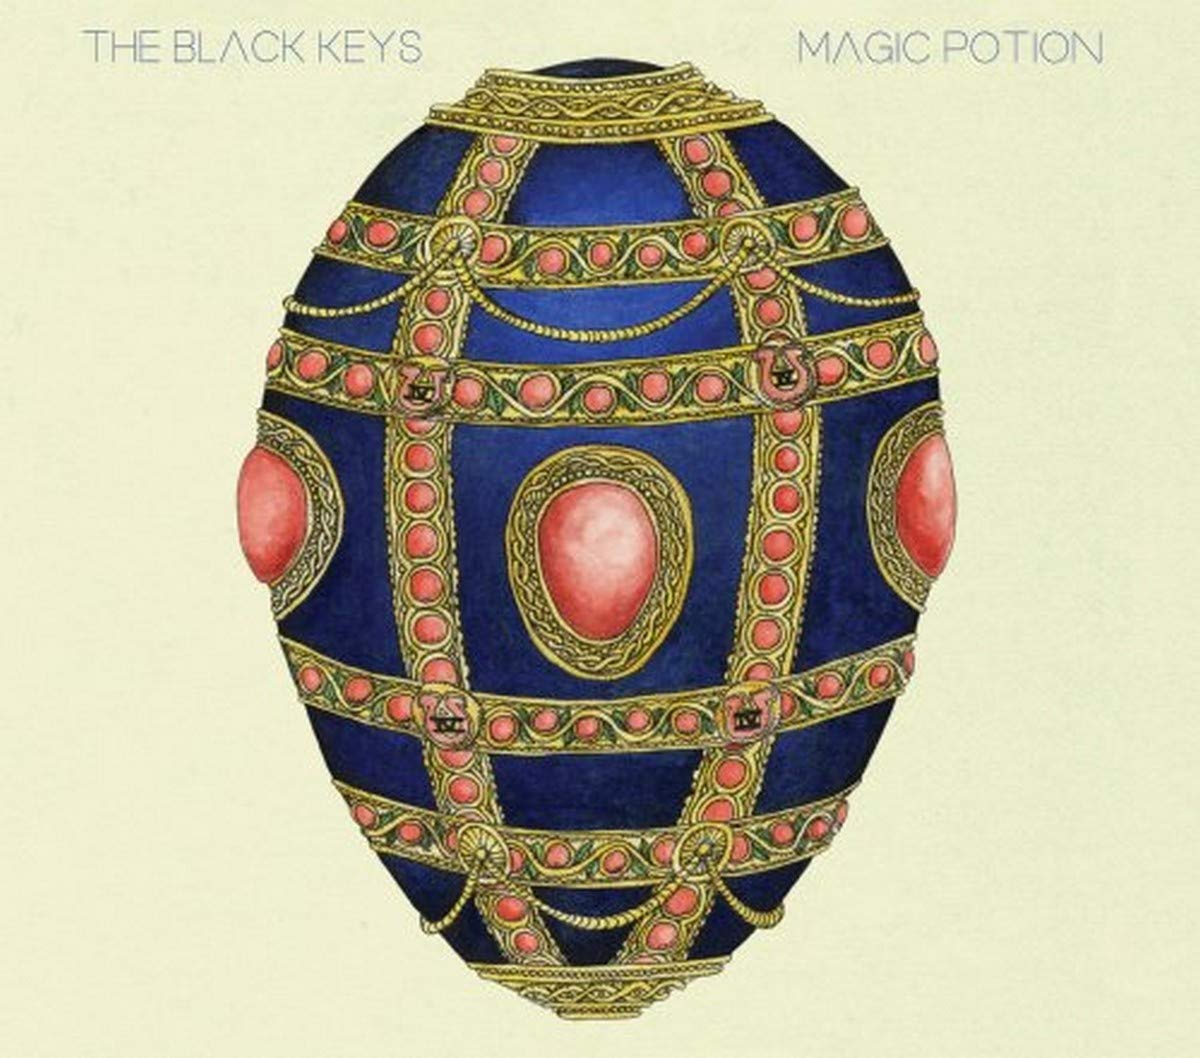 BLACK KEYS - MAGIC POTION Vinyl LP